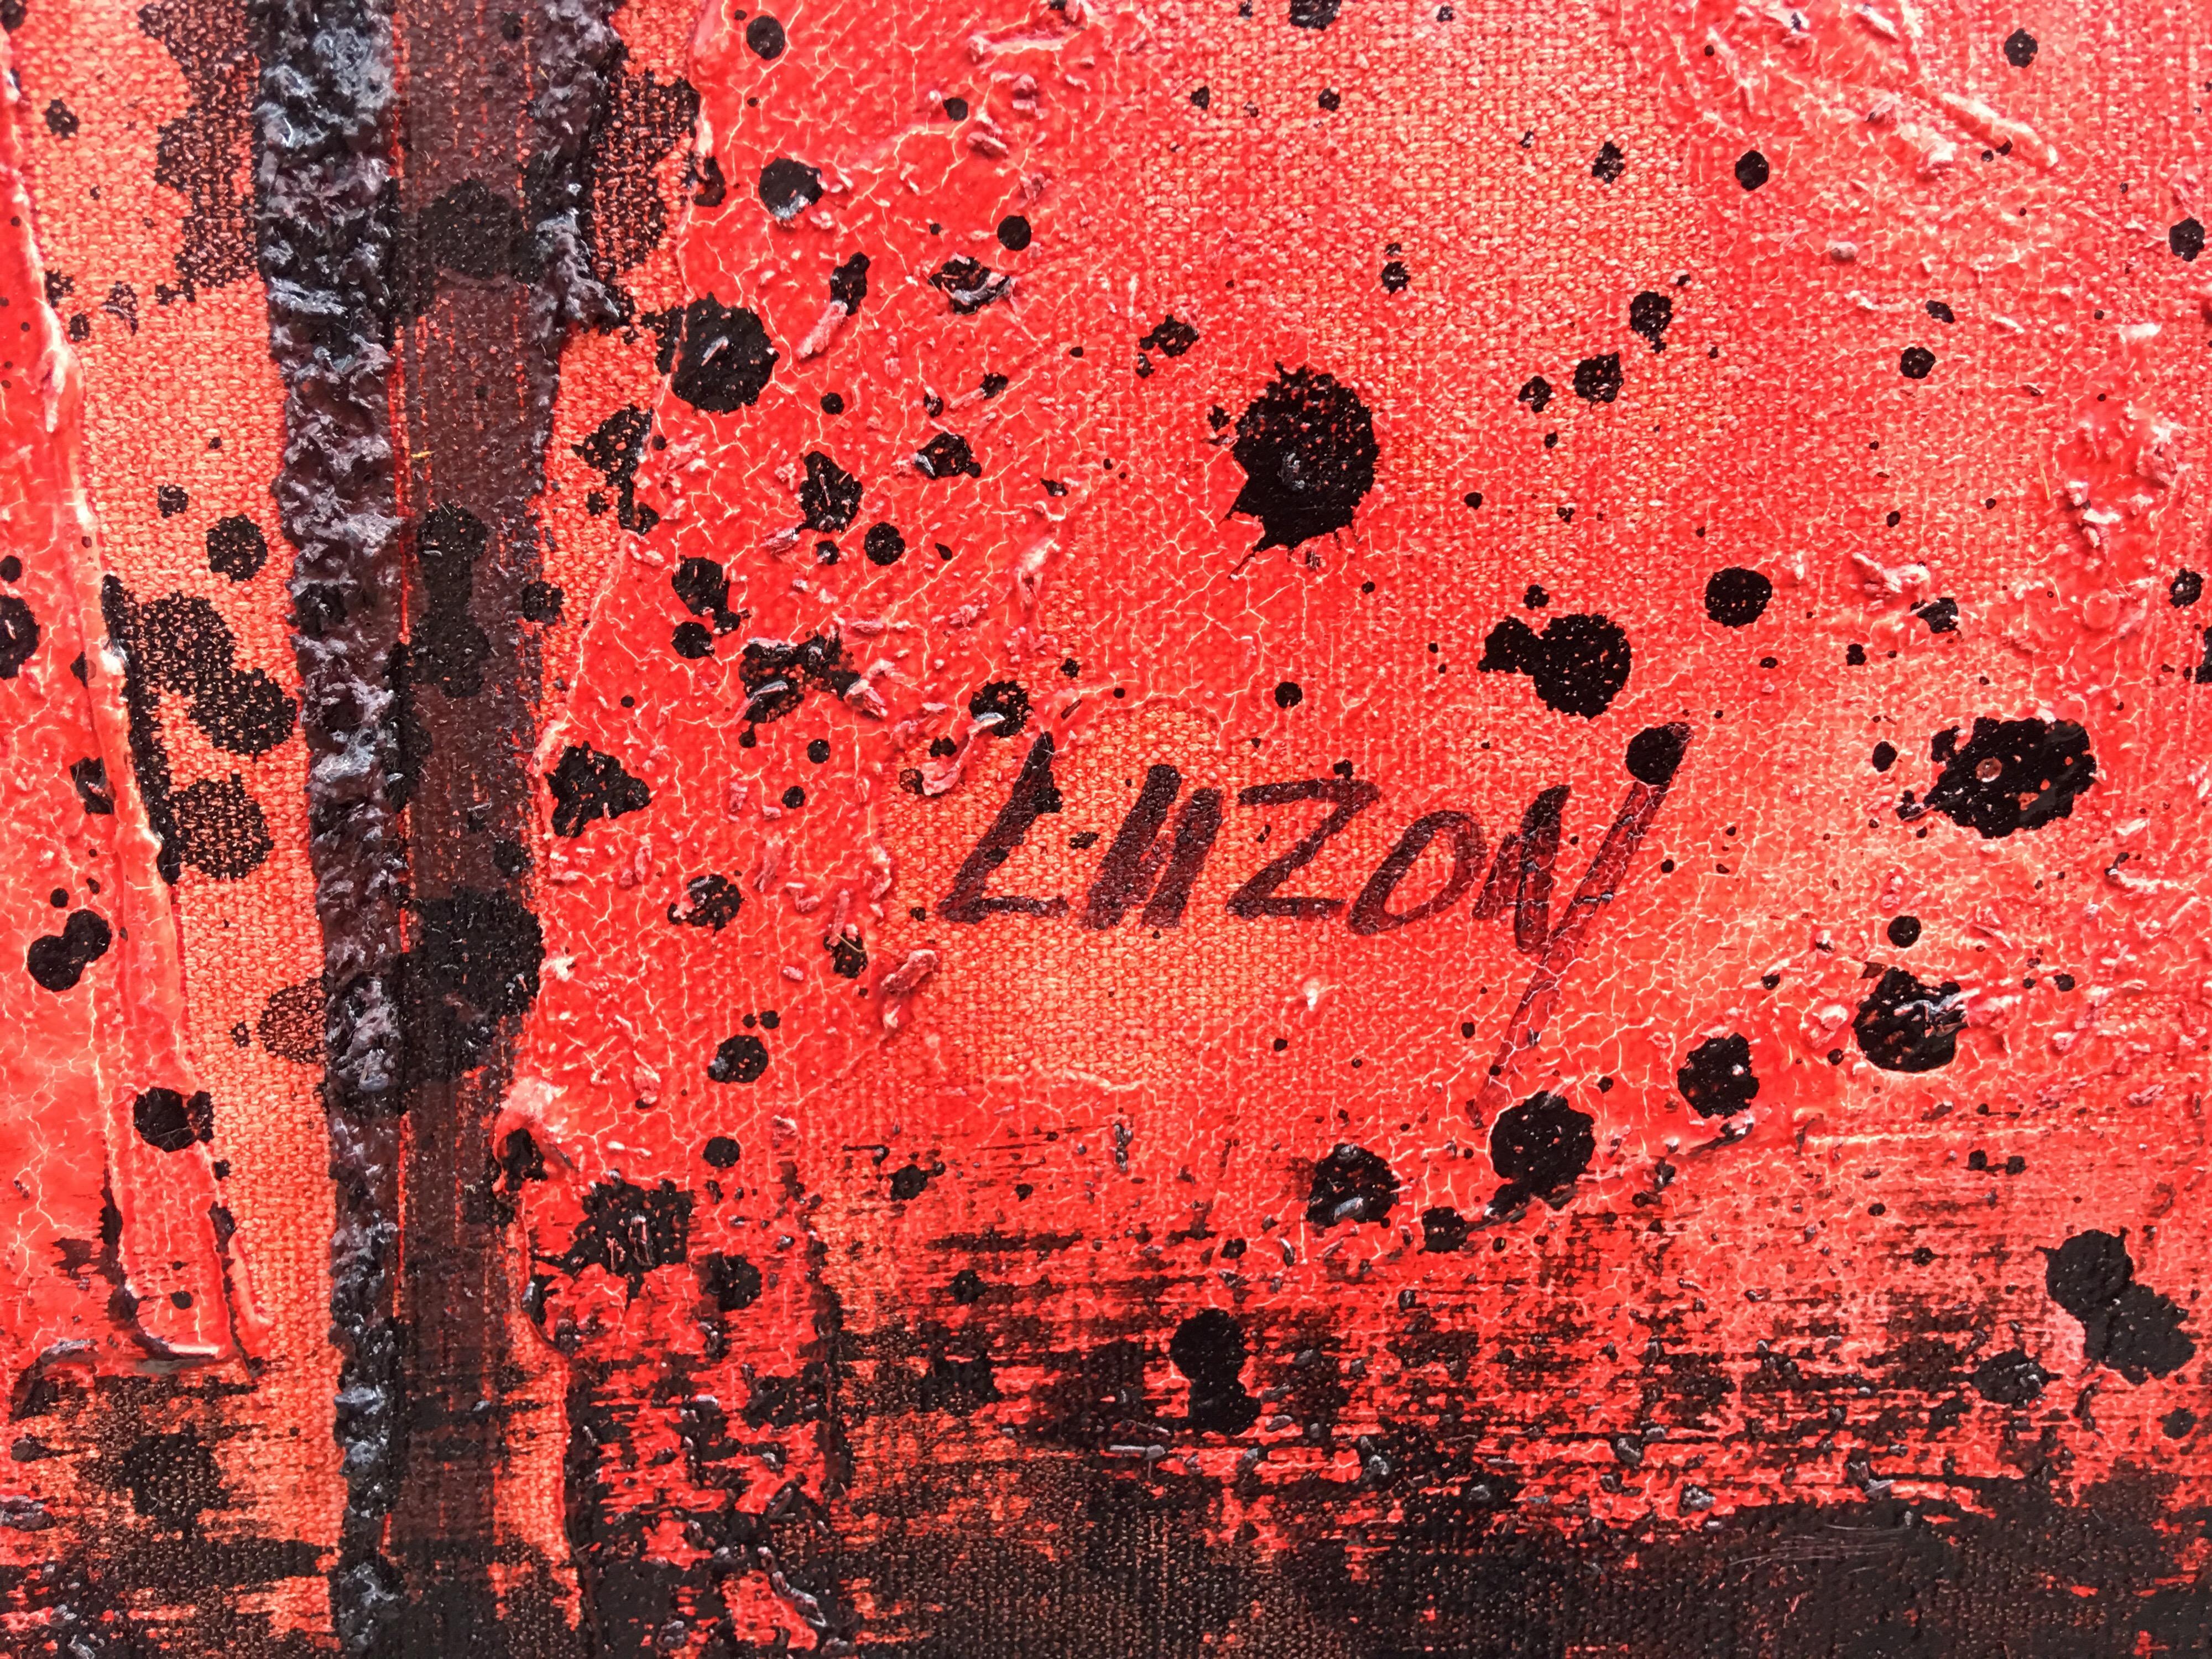 Luzoy Oil on Canvas “Conquistador” Painting 1